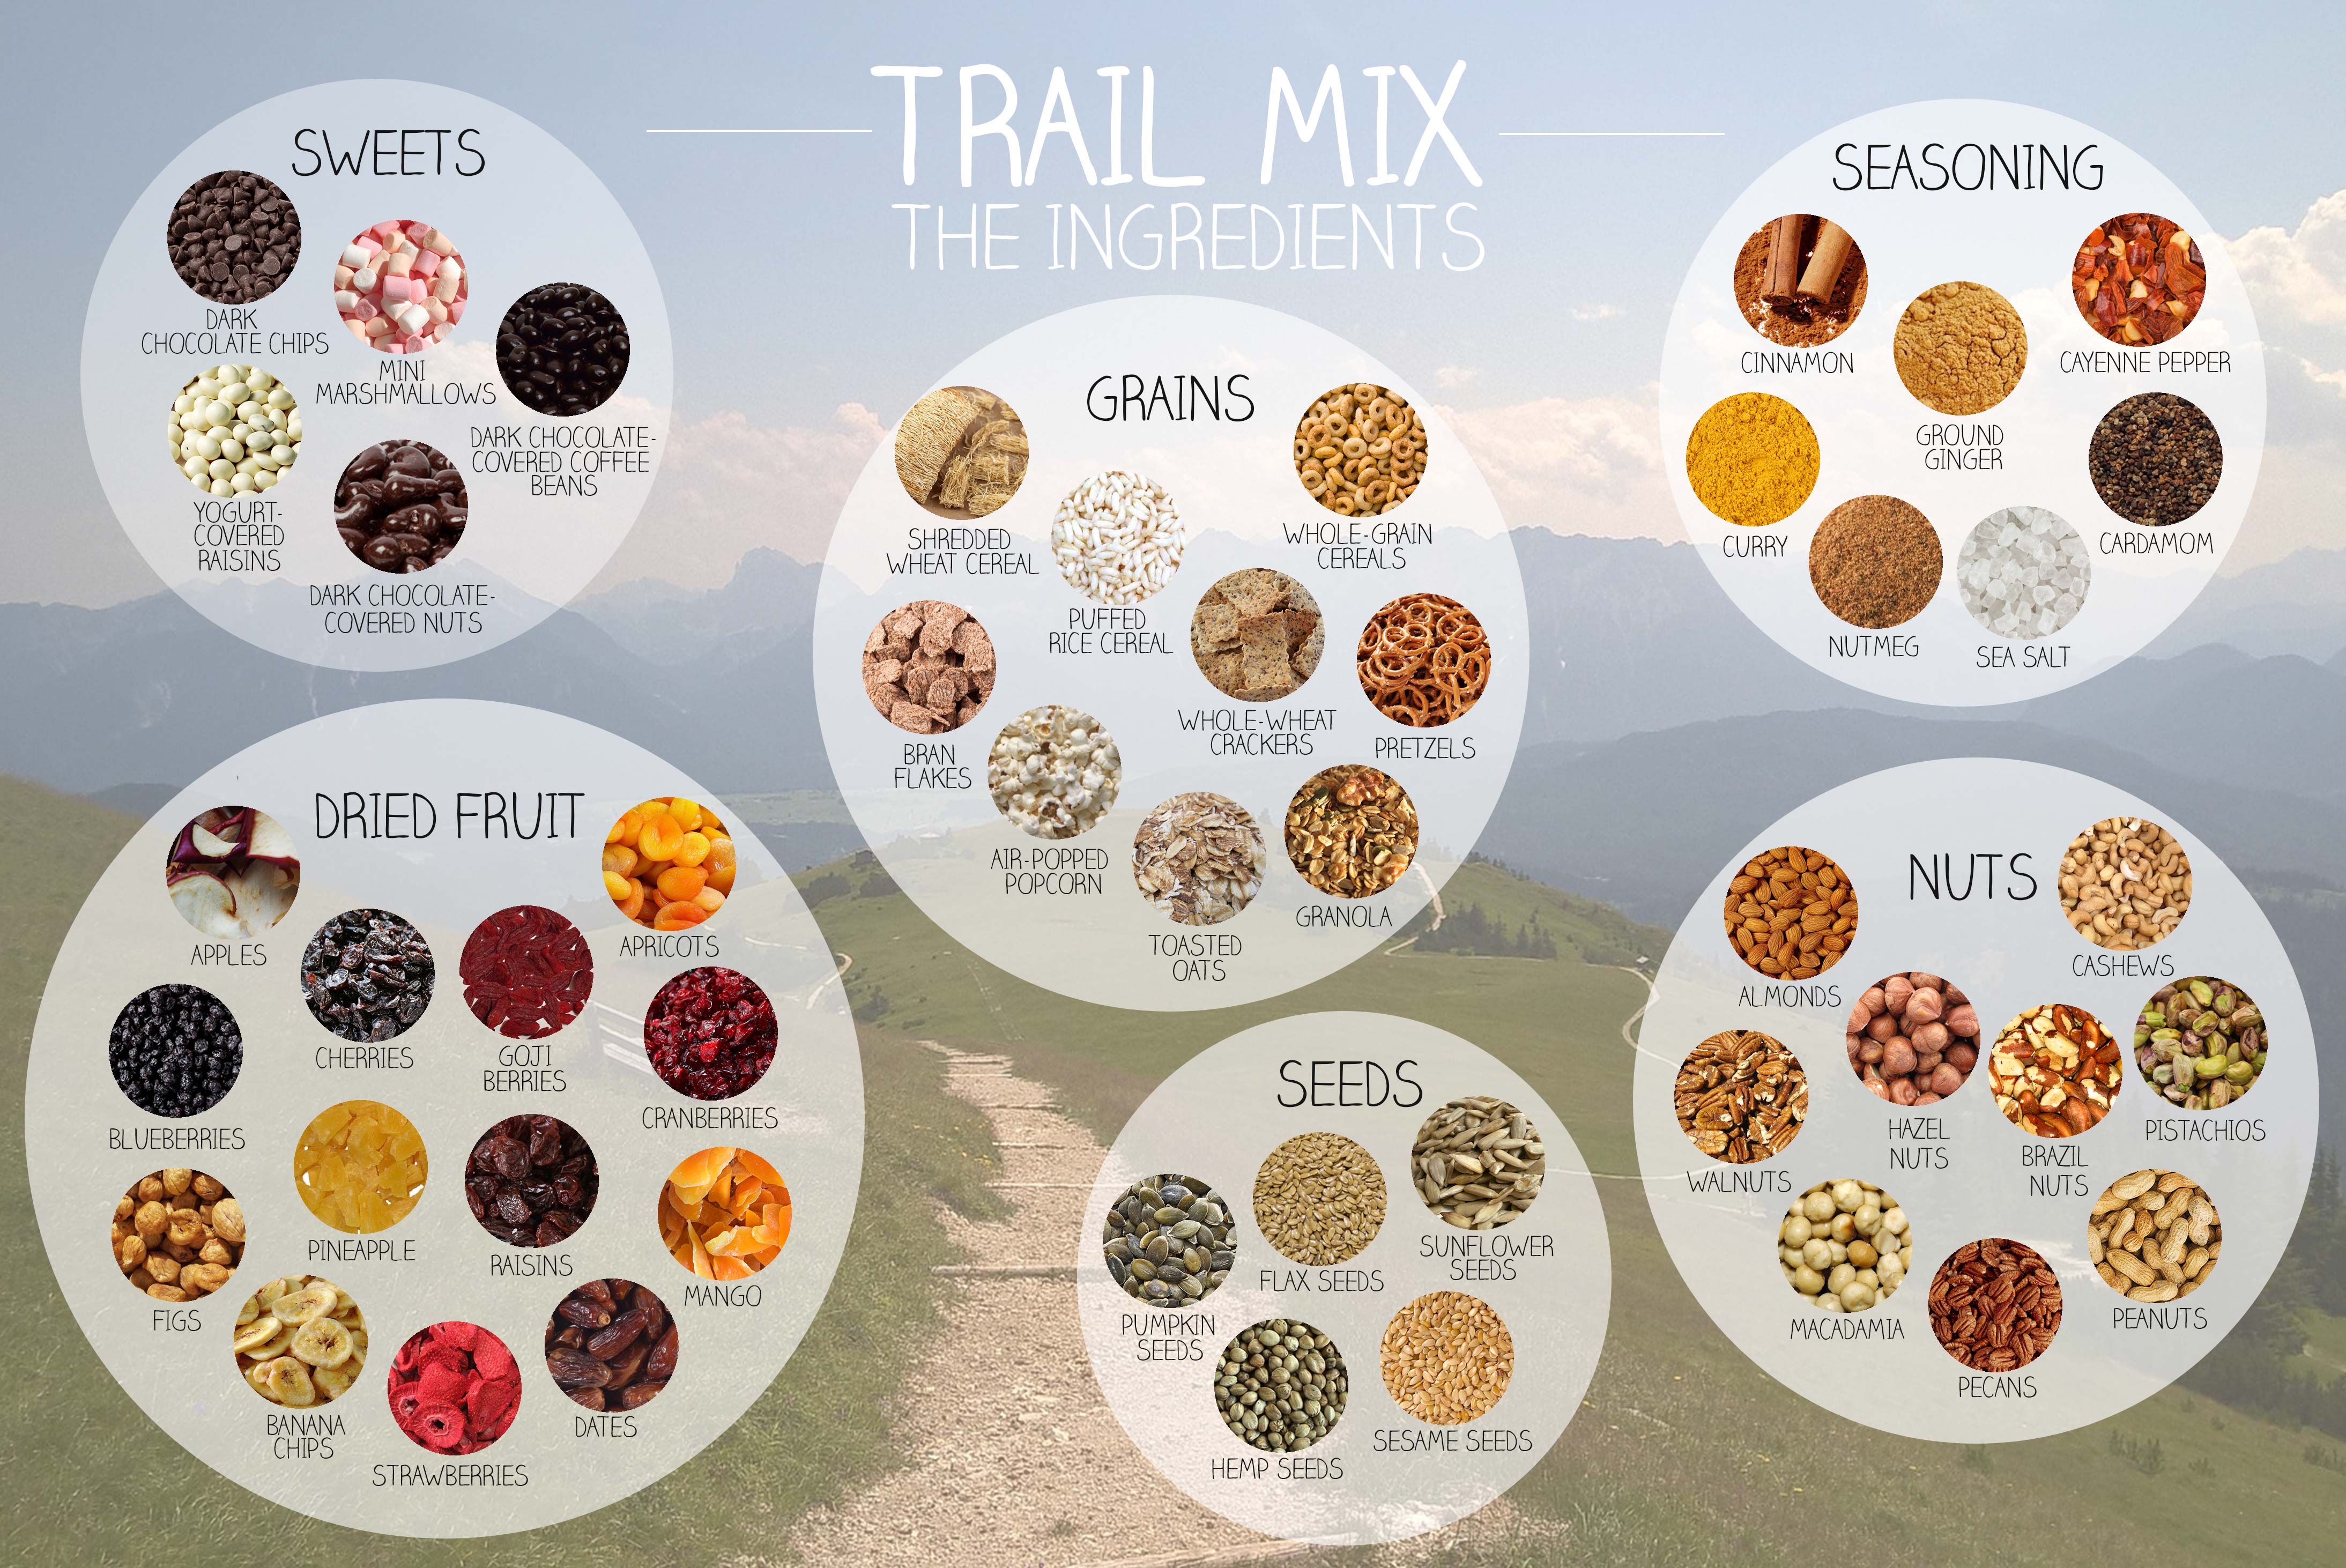 Trail mix ingredients